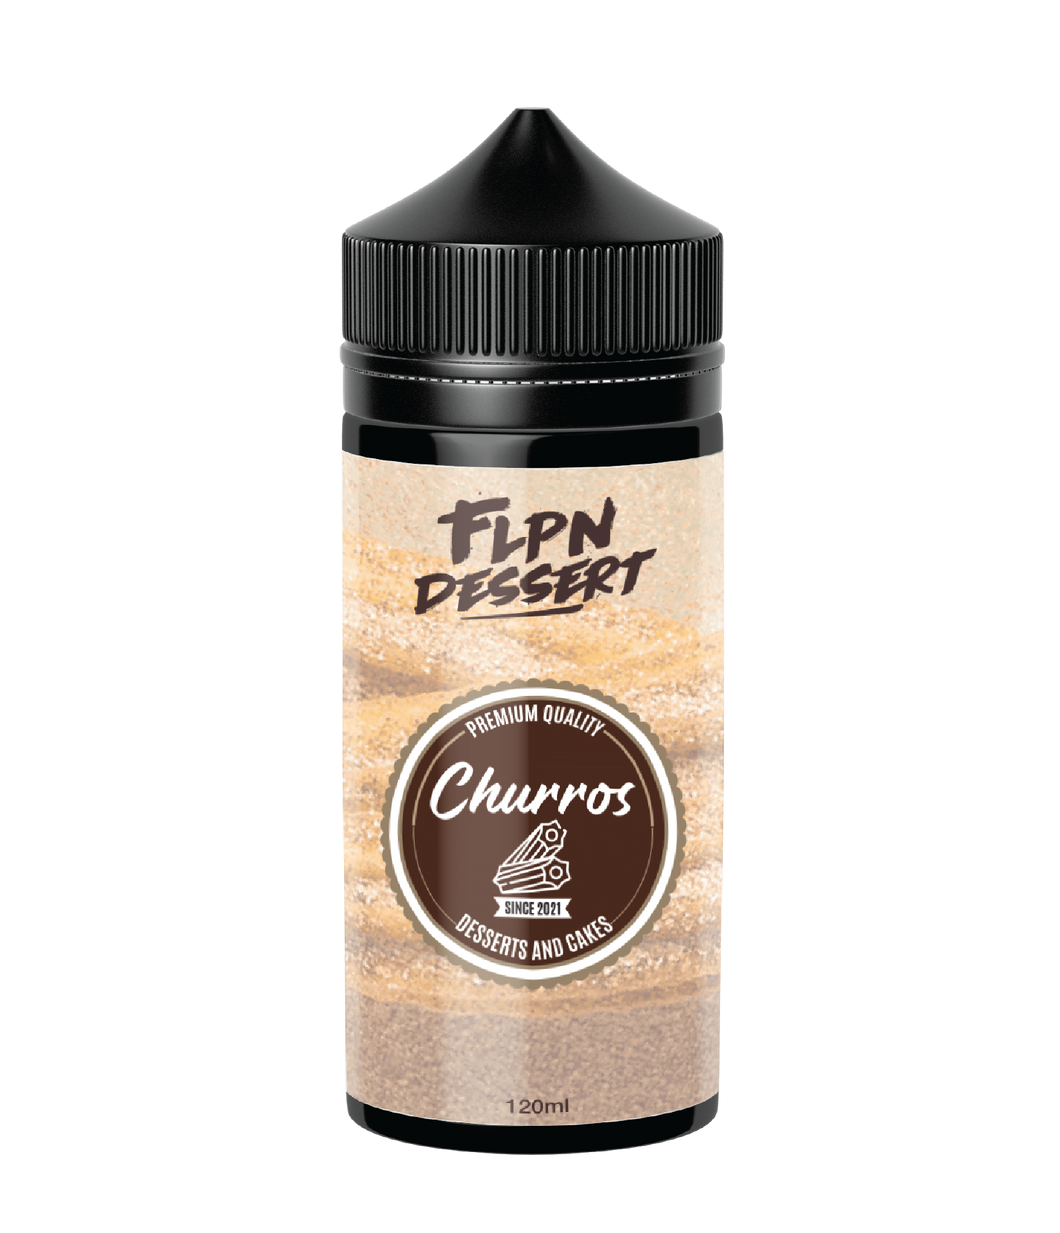 Flpn Dessert - Churros 120ml